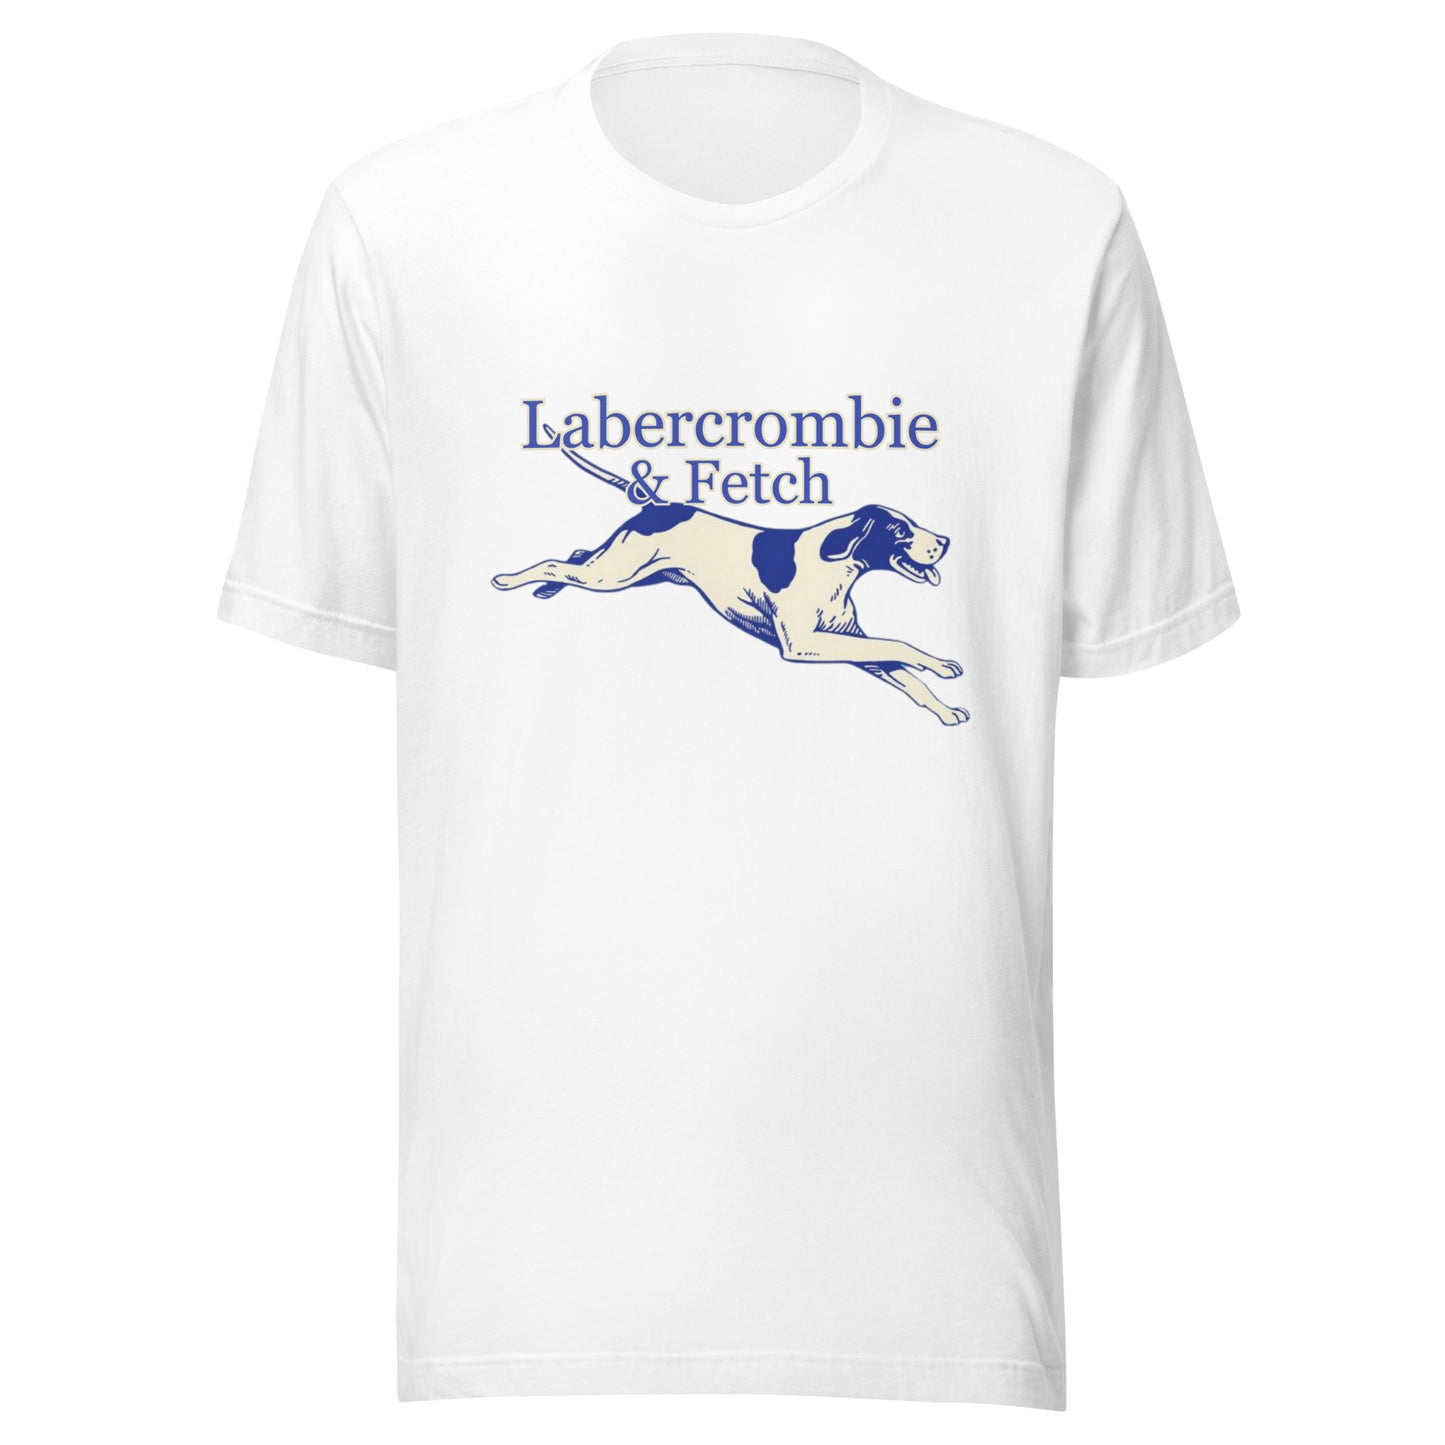 Hound Dog Labercrombie Unisex t-shirt